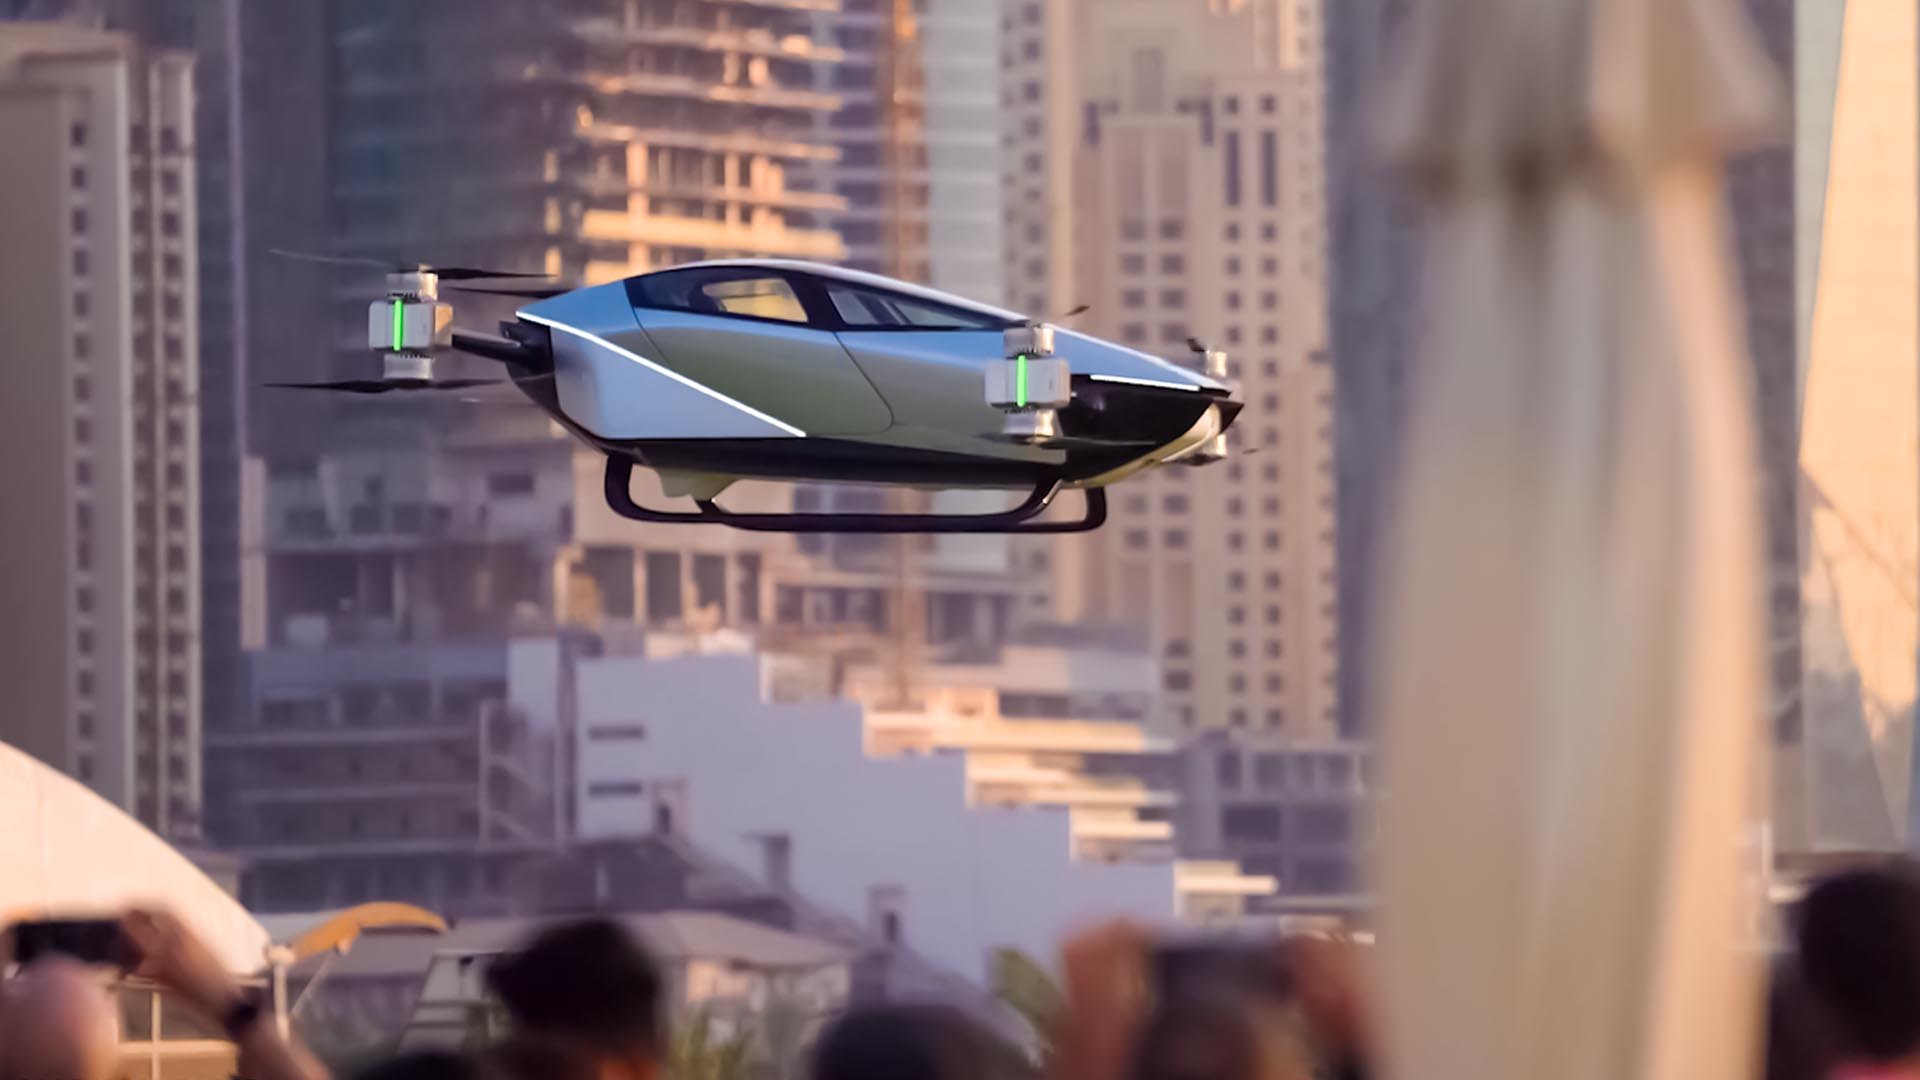 Public test flight of an eVTOL flying car takes place in Dubai